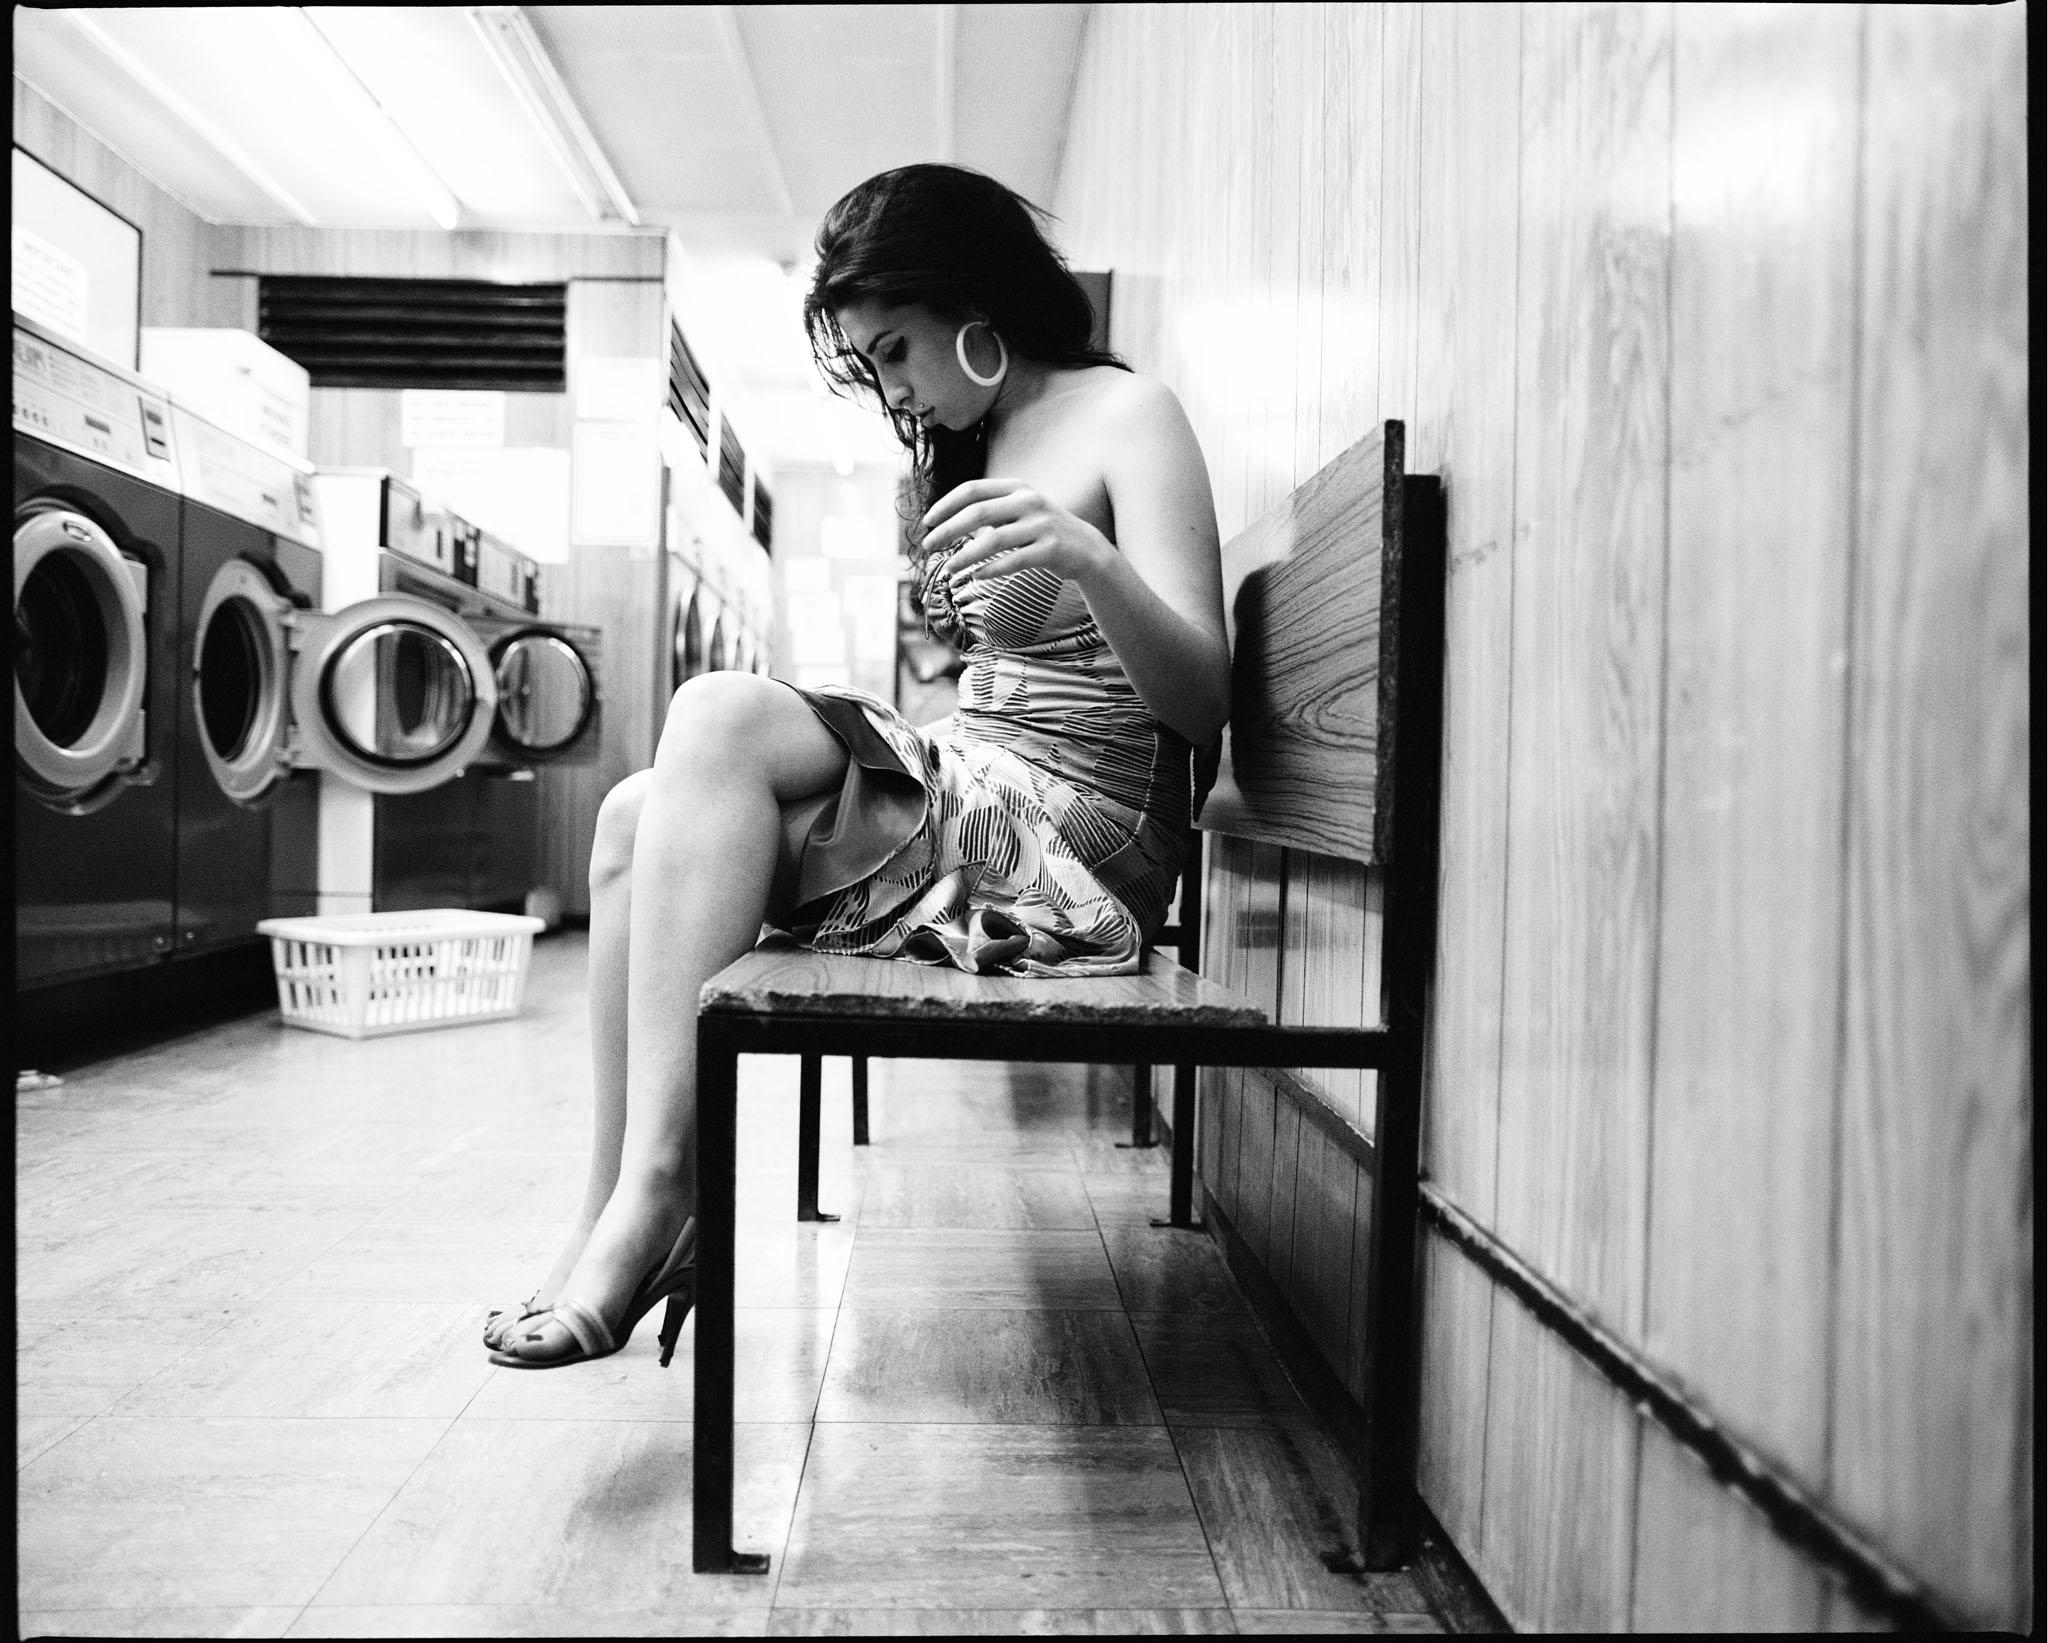 Jake Chessum Portrait Photograph – Amy Winehouse at the laundromat 20x24" Druck